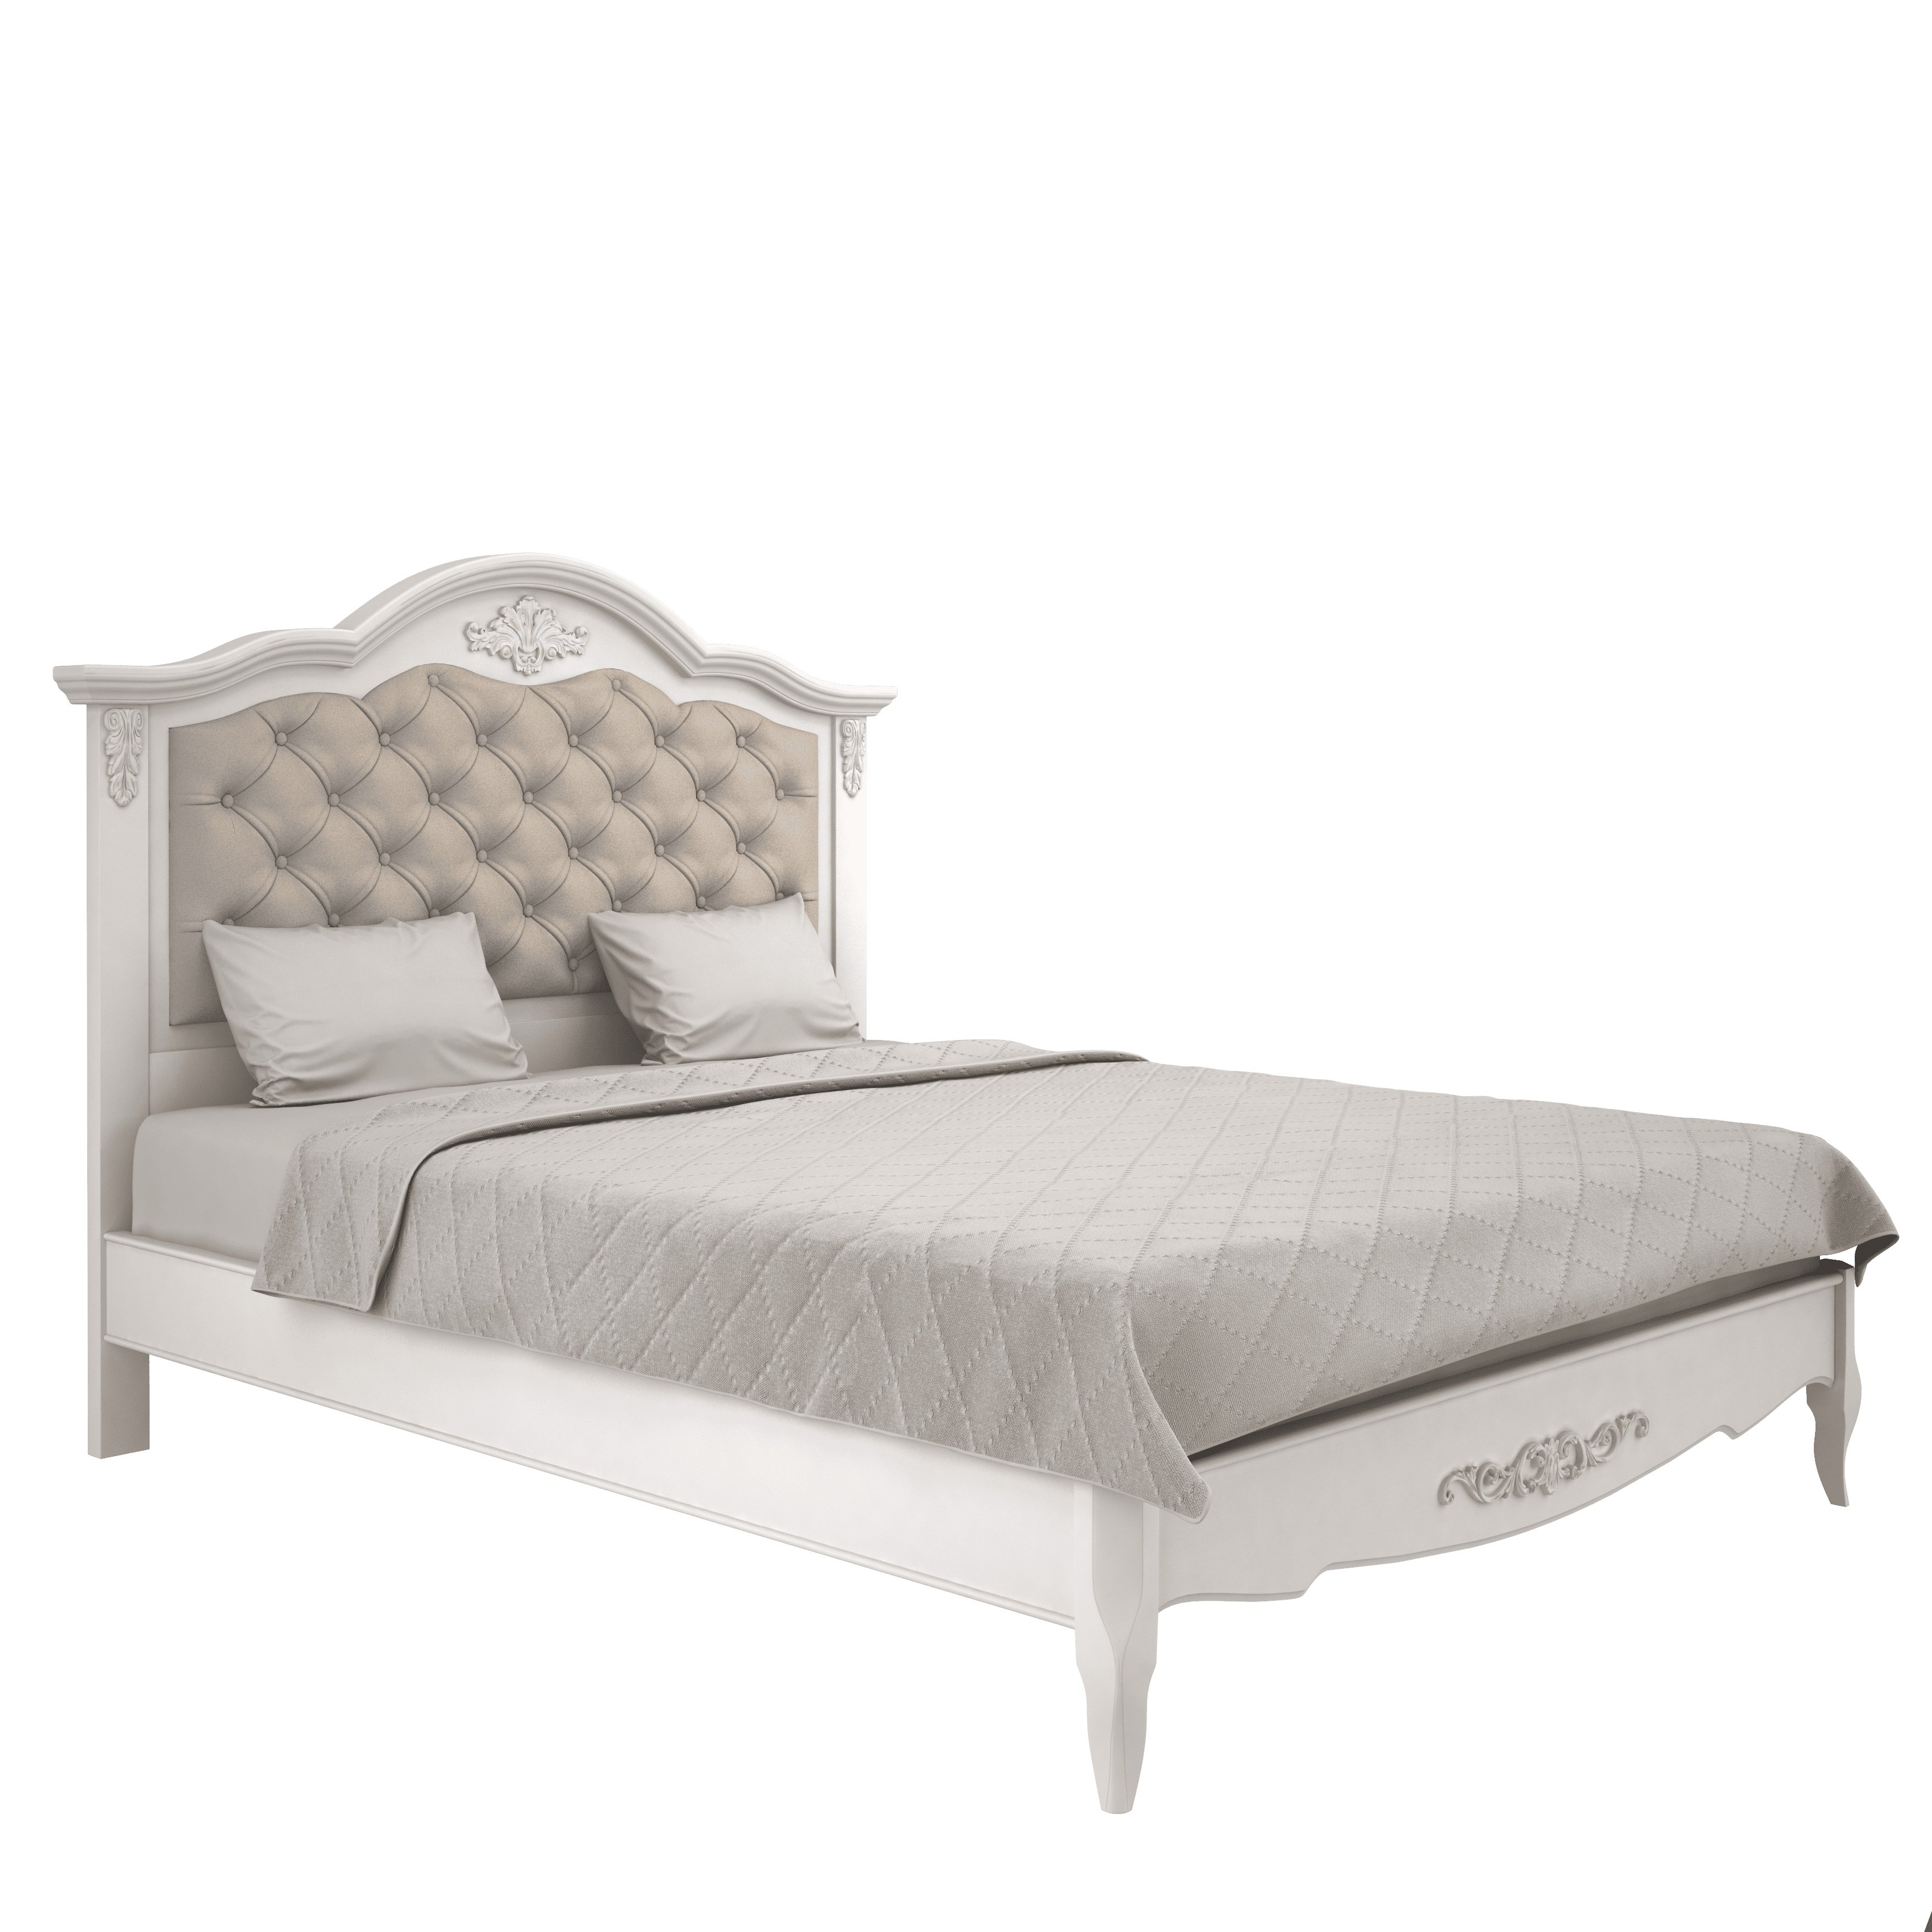 Кровать Aletan Provence, двуспальная, 160x200 см, цвет: слоновая кость, размер 179х211х145 см (B216)B216